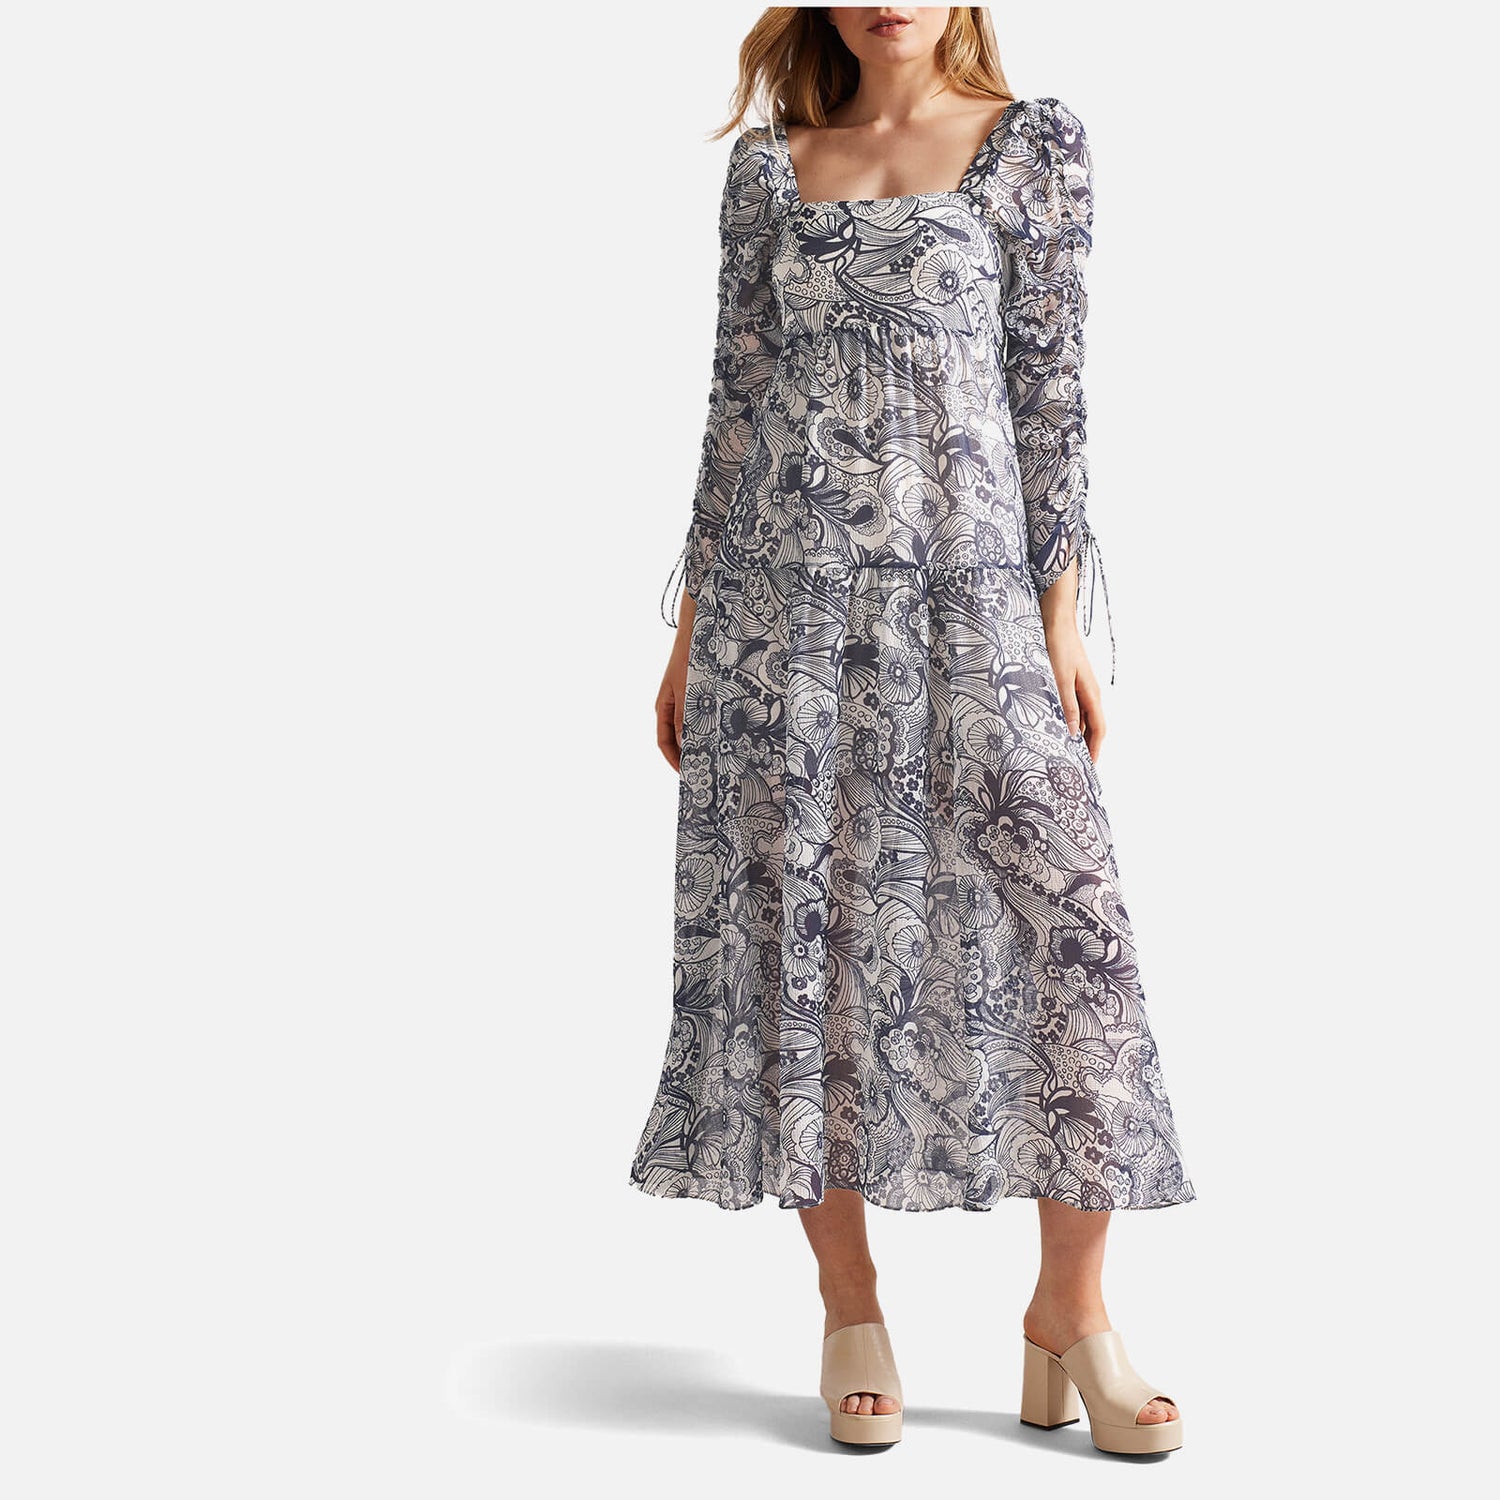 Ted Baker Adlinah Floral Print Chiffon Dress - UK 6